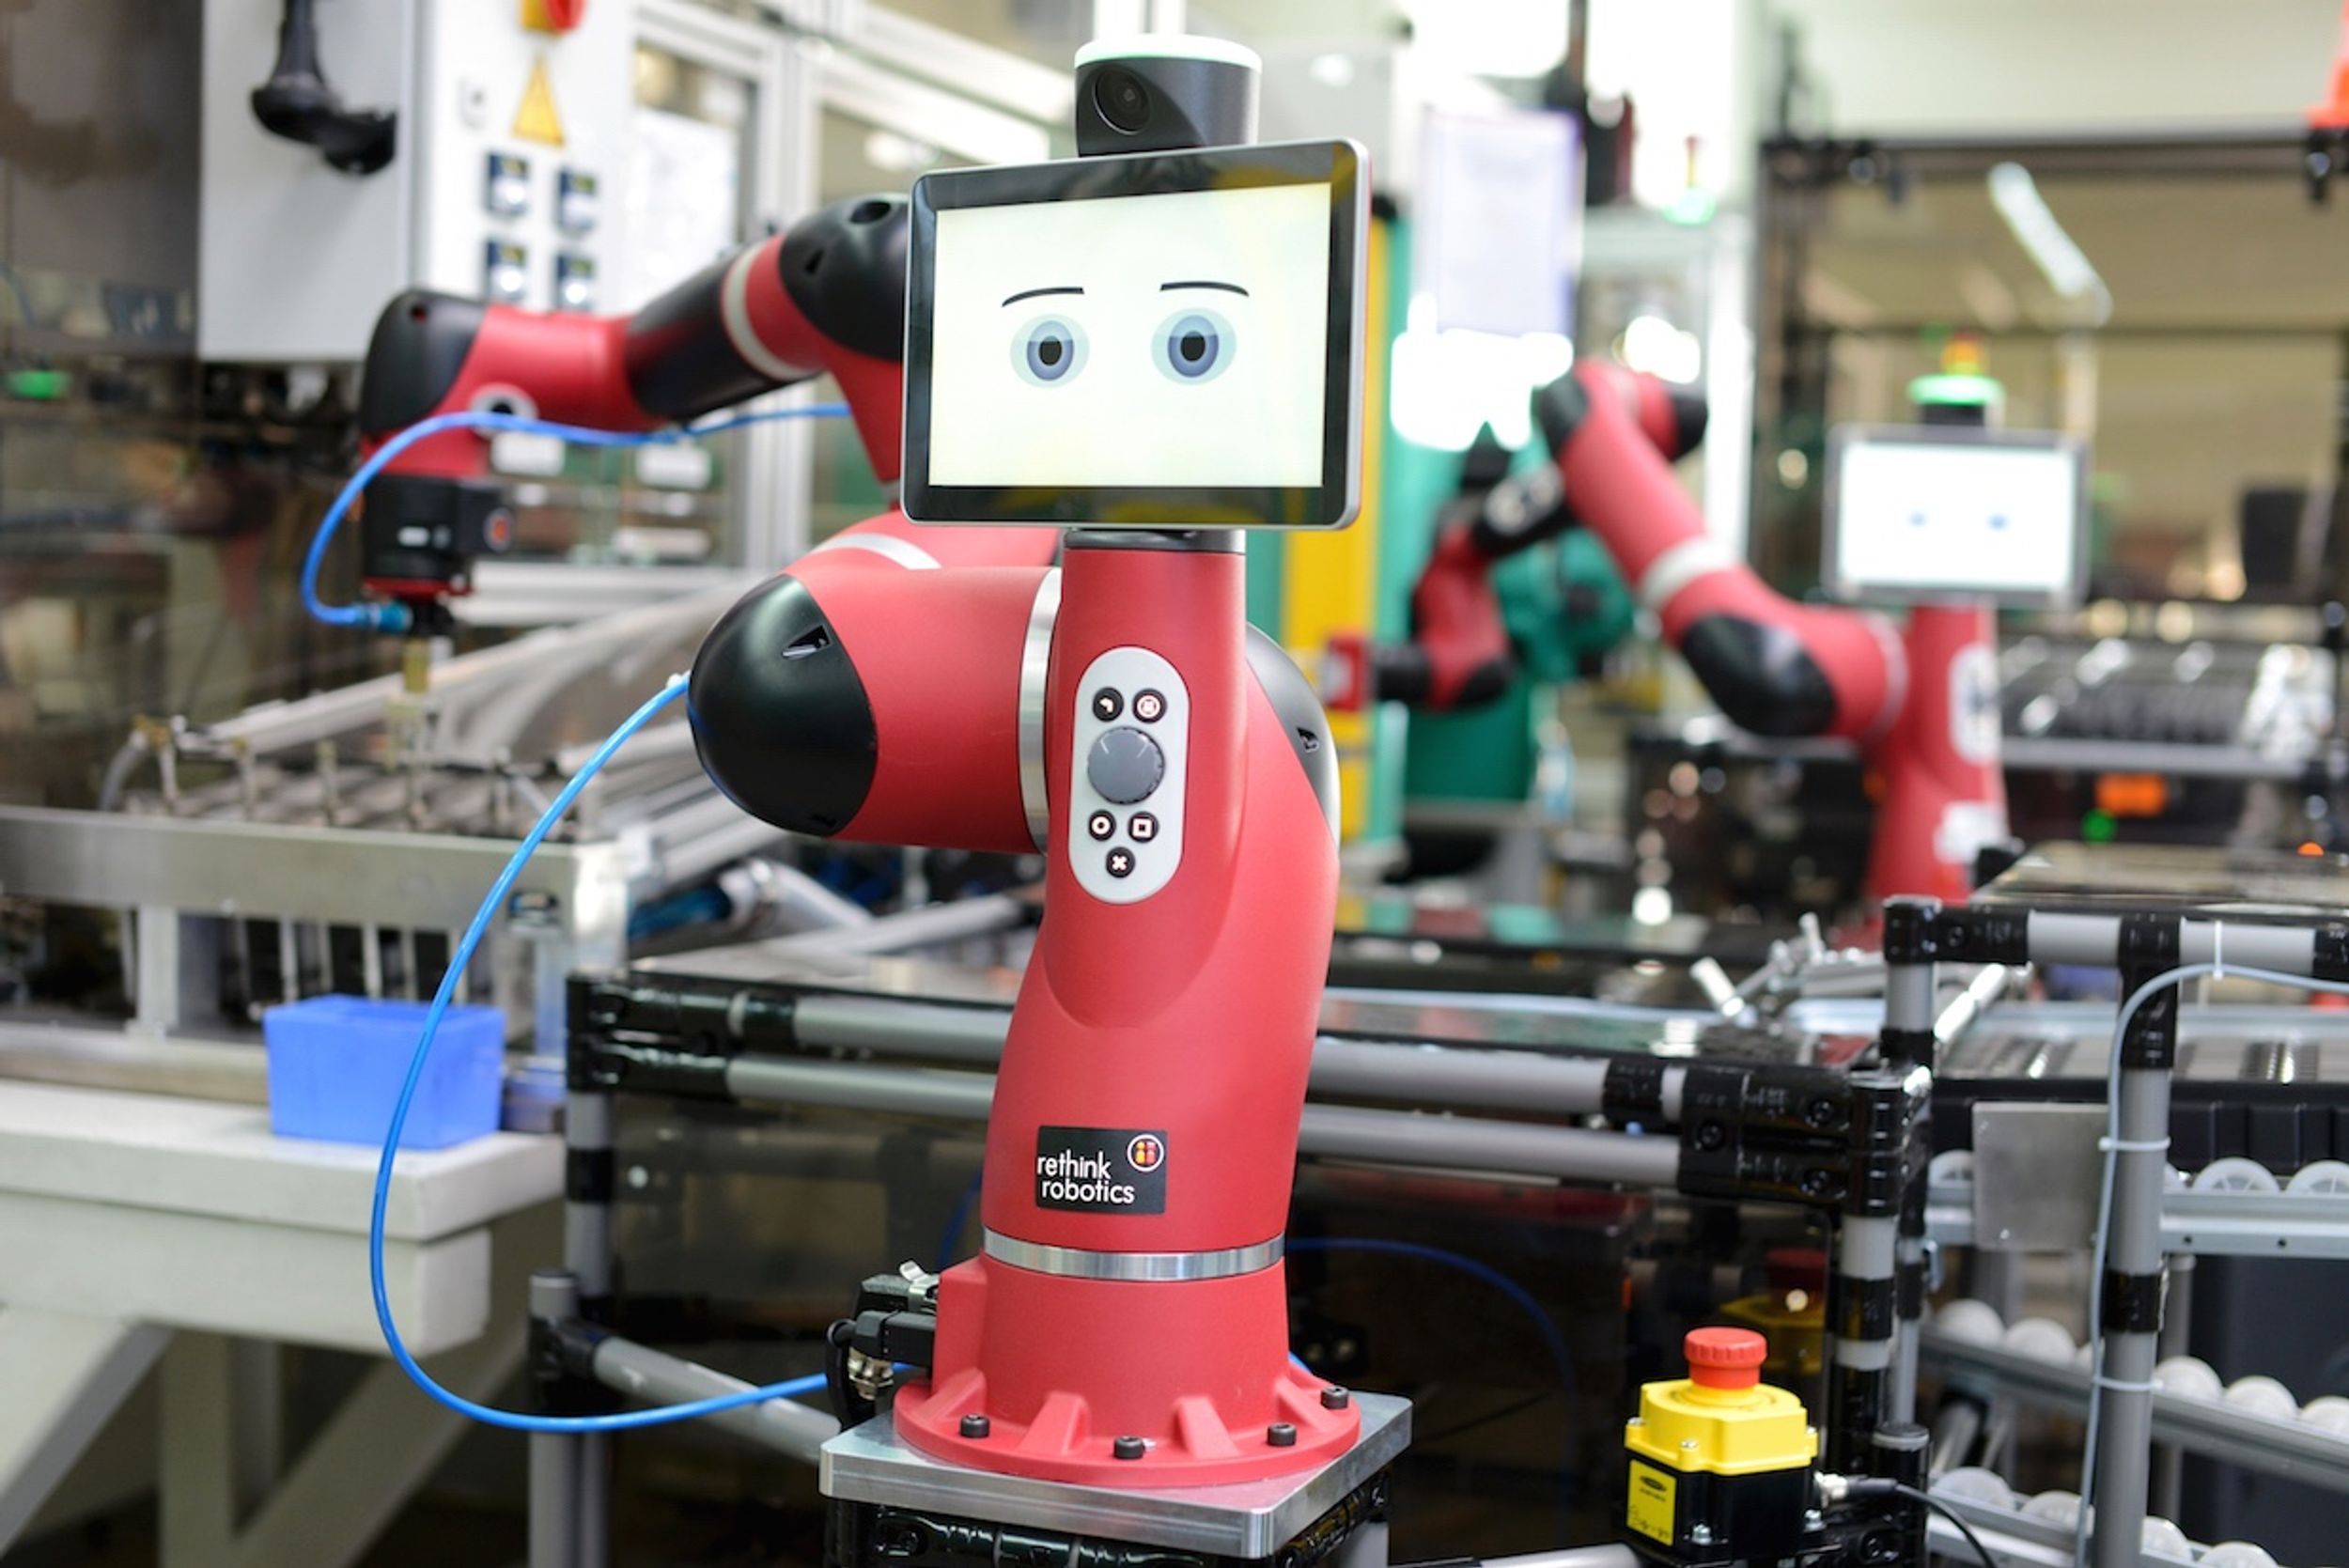 Rethink Robotics' Sawyer robot with Intera 5 software platform